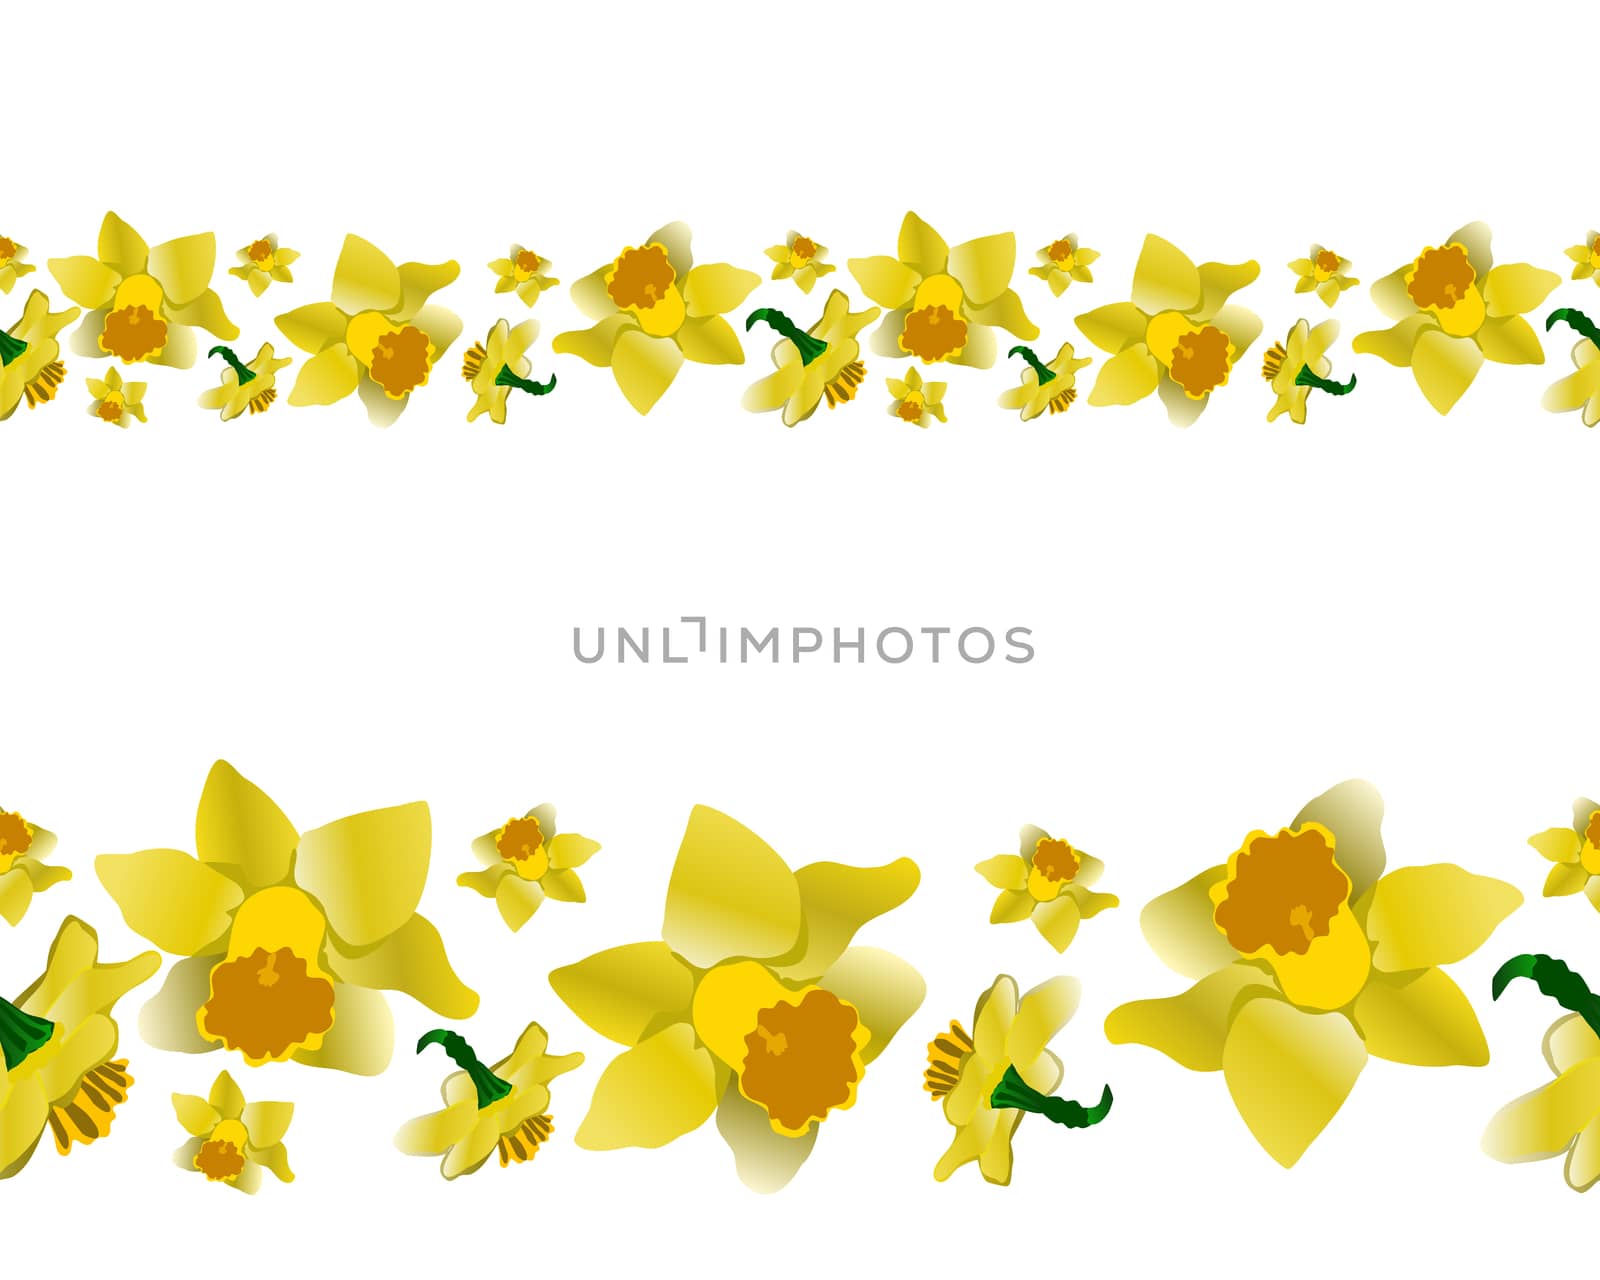 Spring yellow daffodils endless banner by Nata_Prando